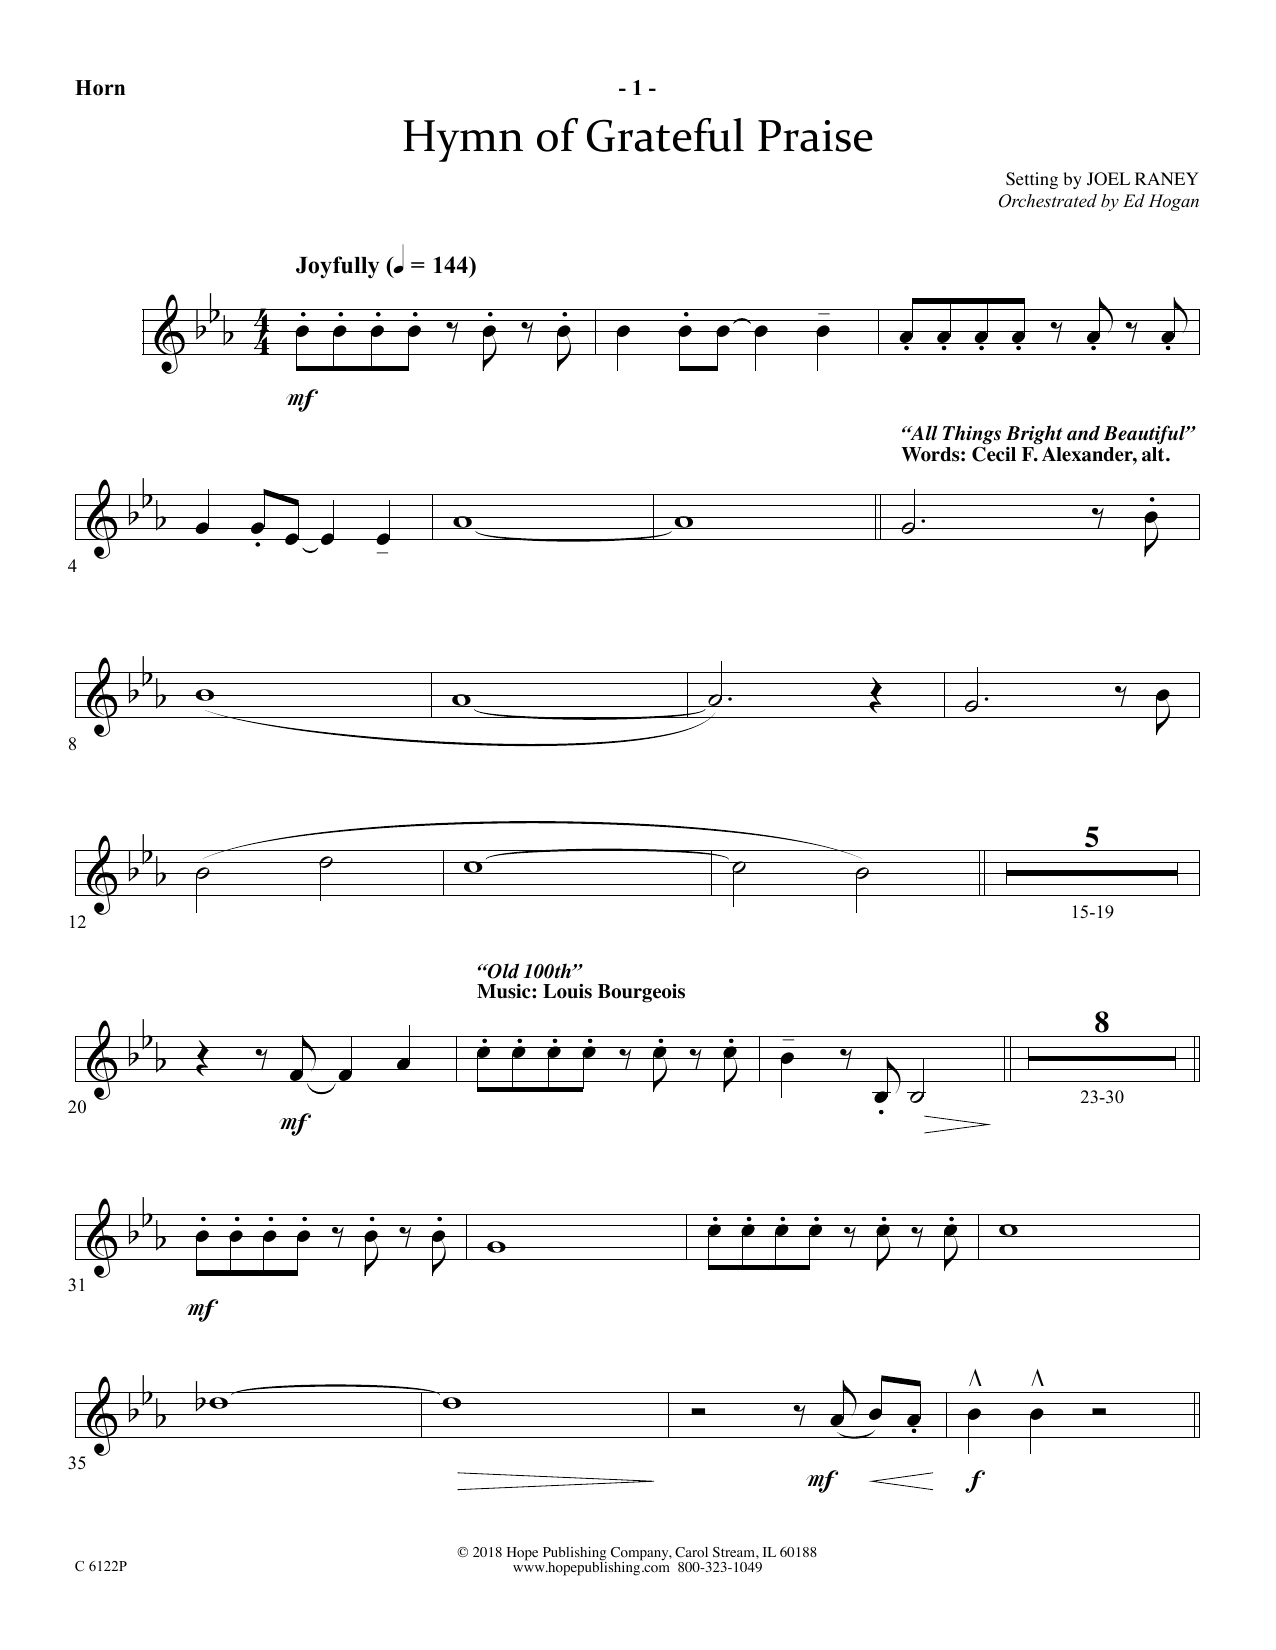 Download Joel Raney Hymn Of Grateful Praise - Flugelhorn So Sheet Music